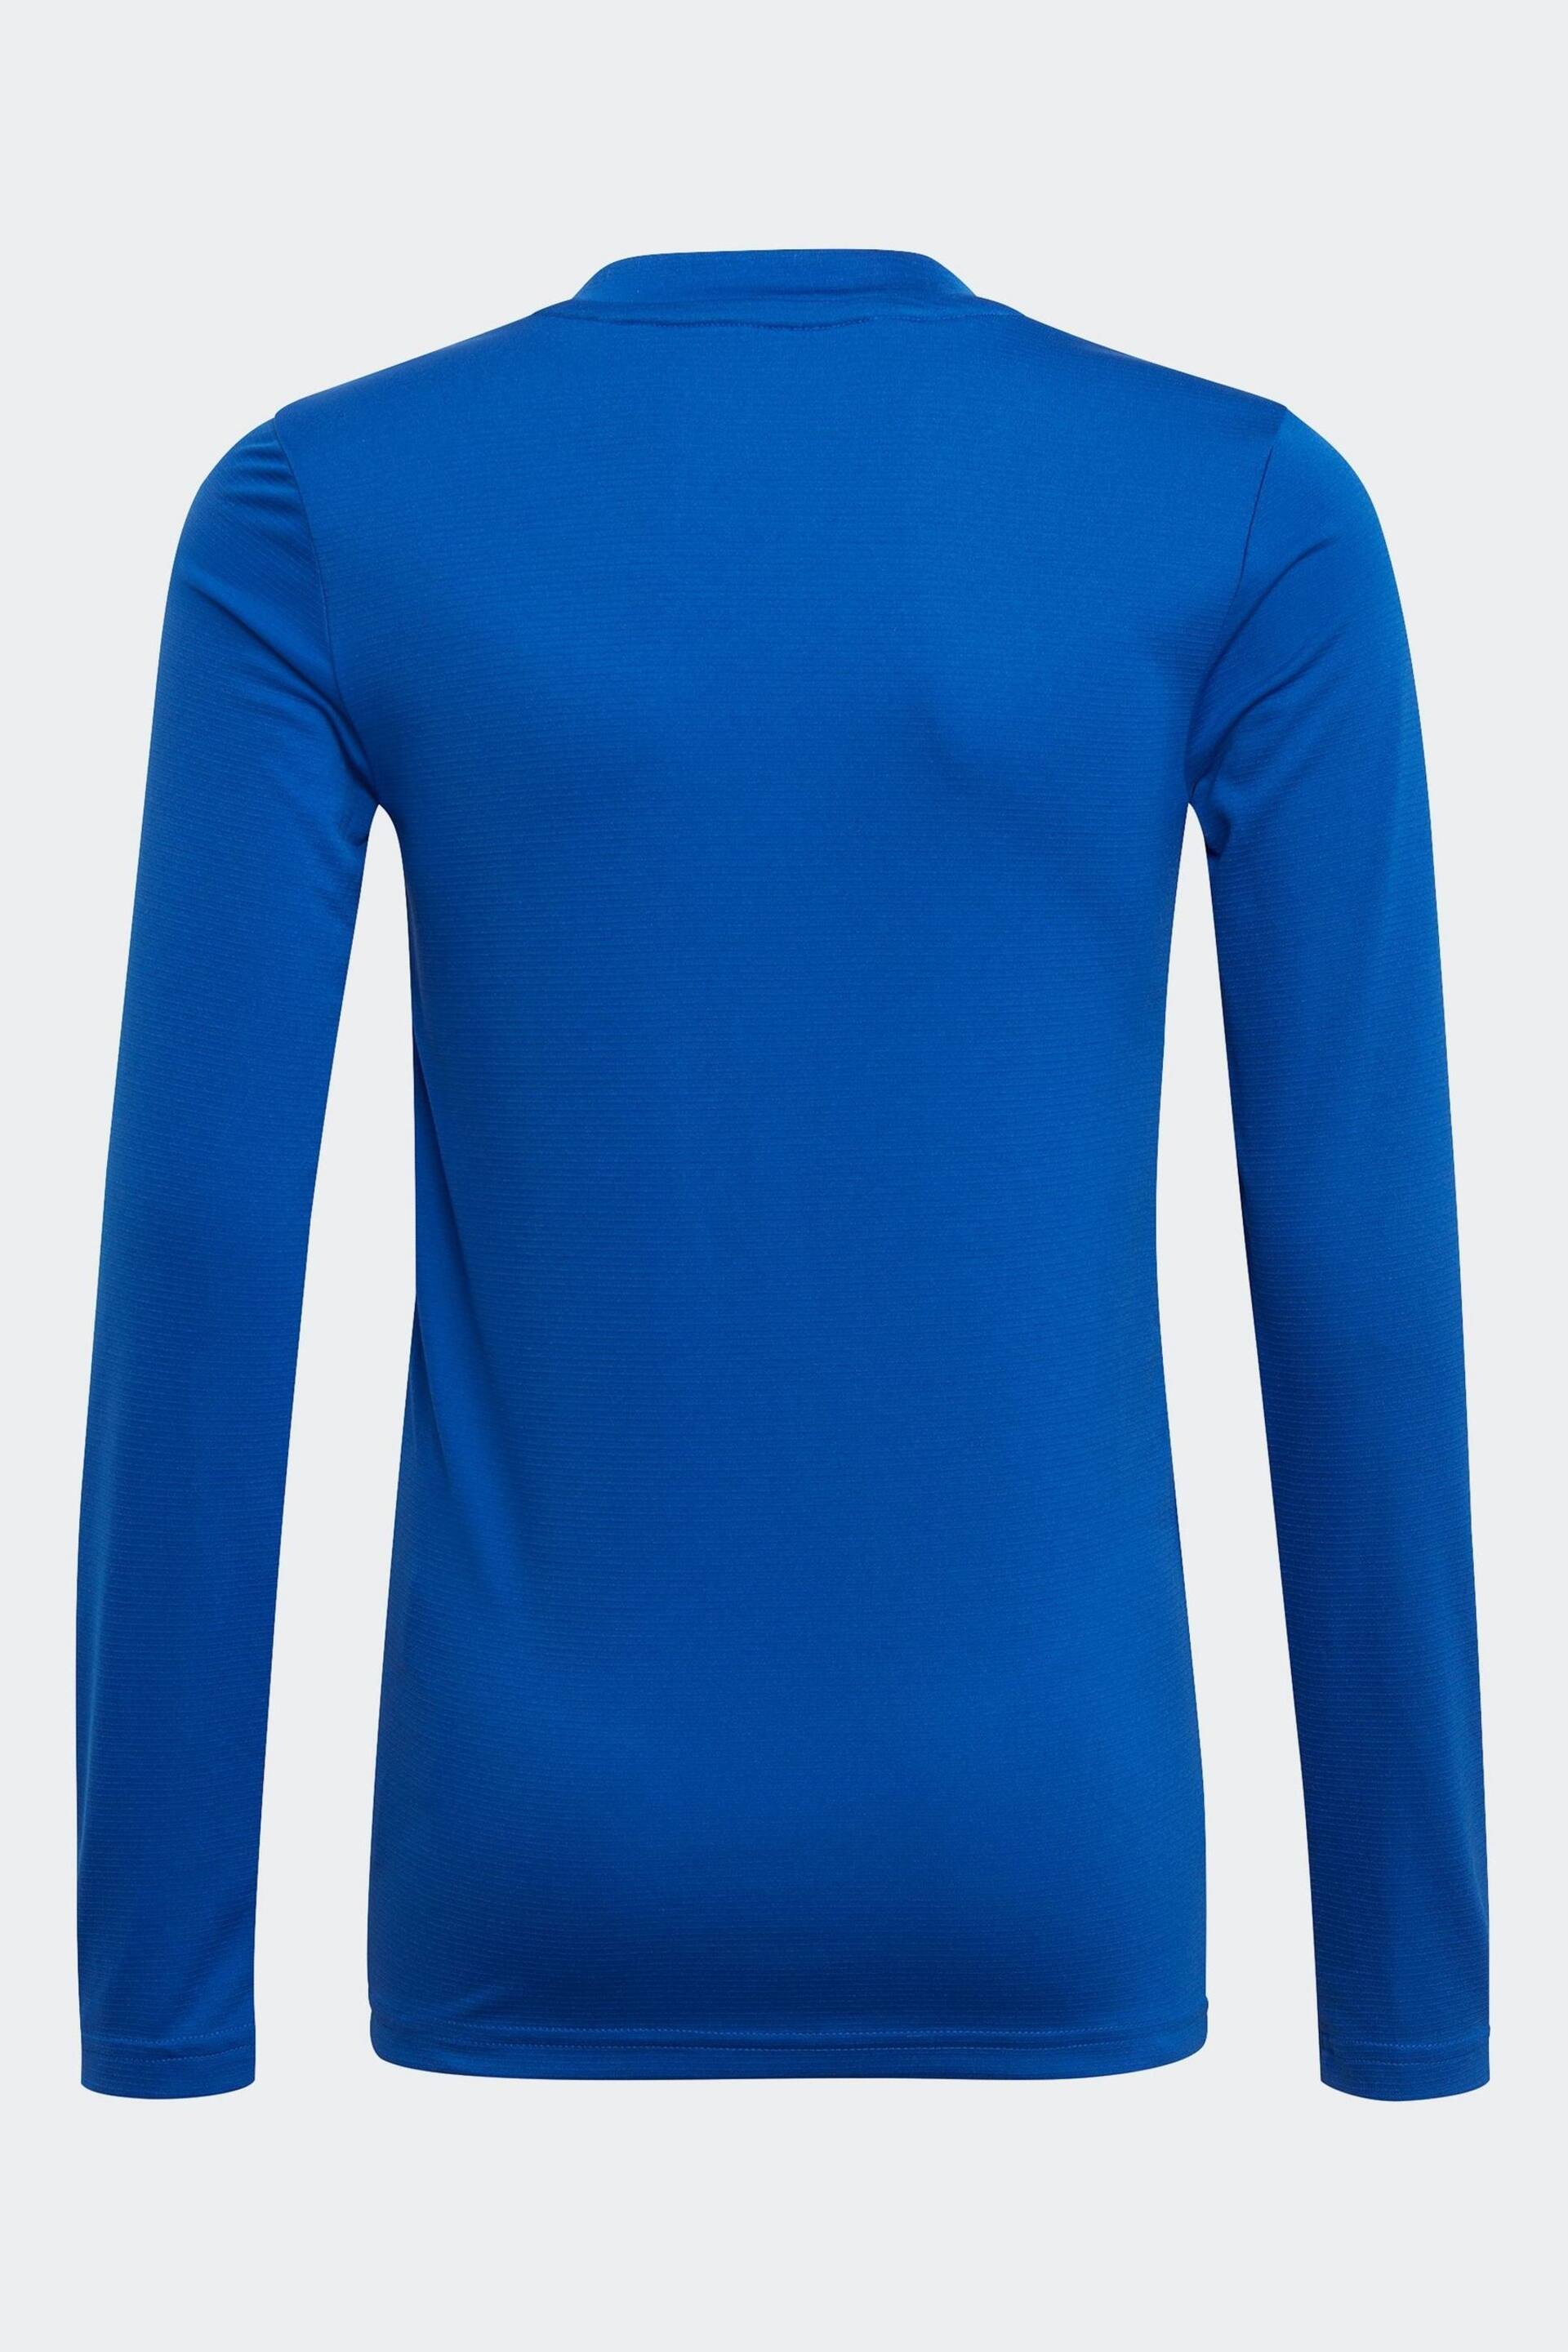 adidas Bright Blue Team Base T-Shirt - Image 2 of 5